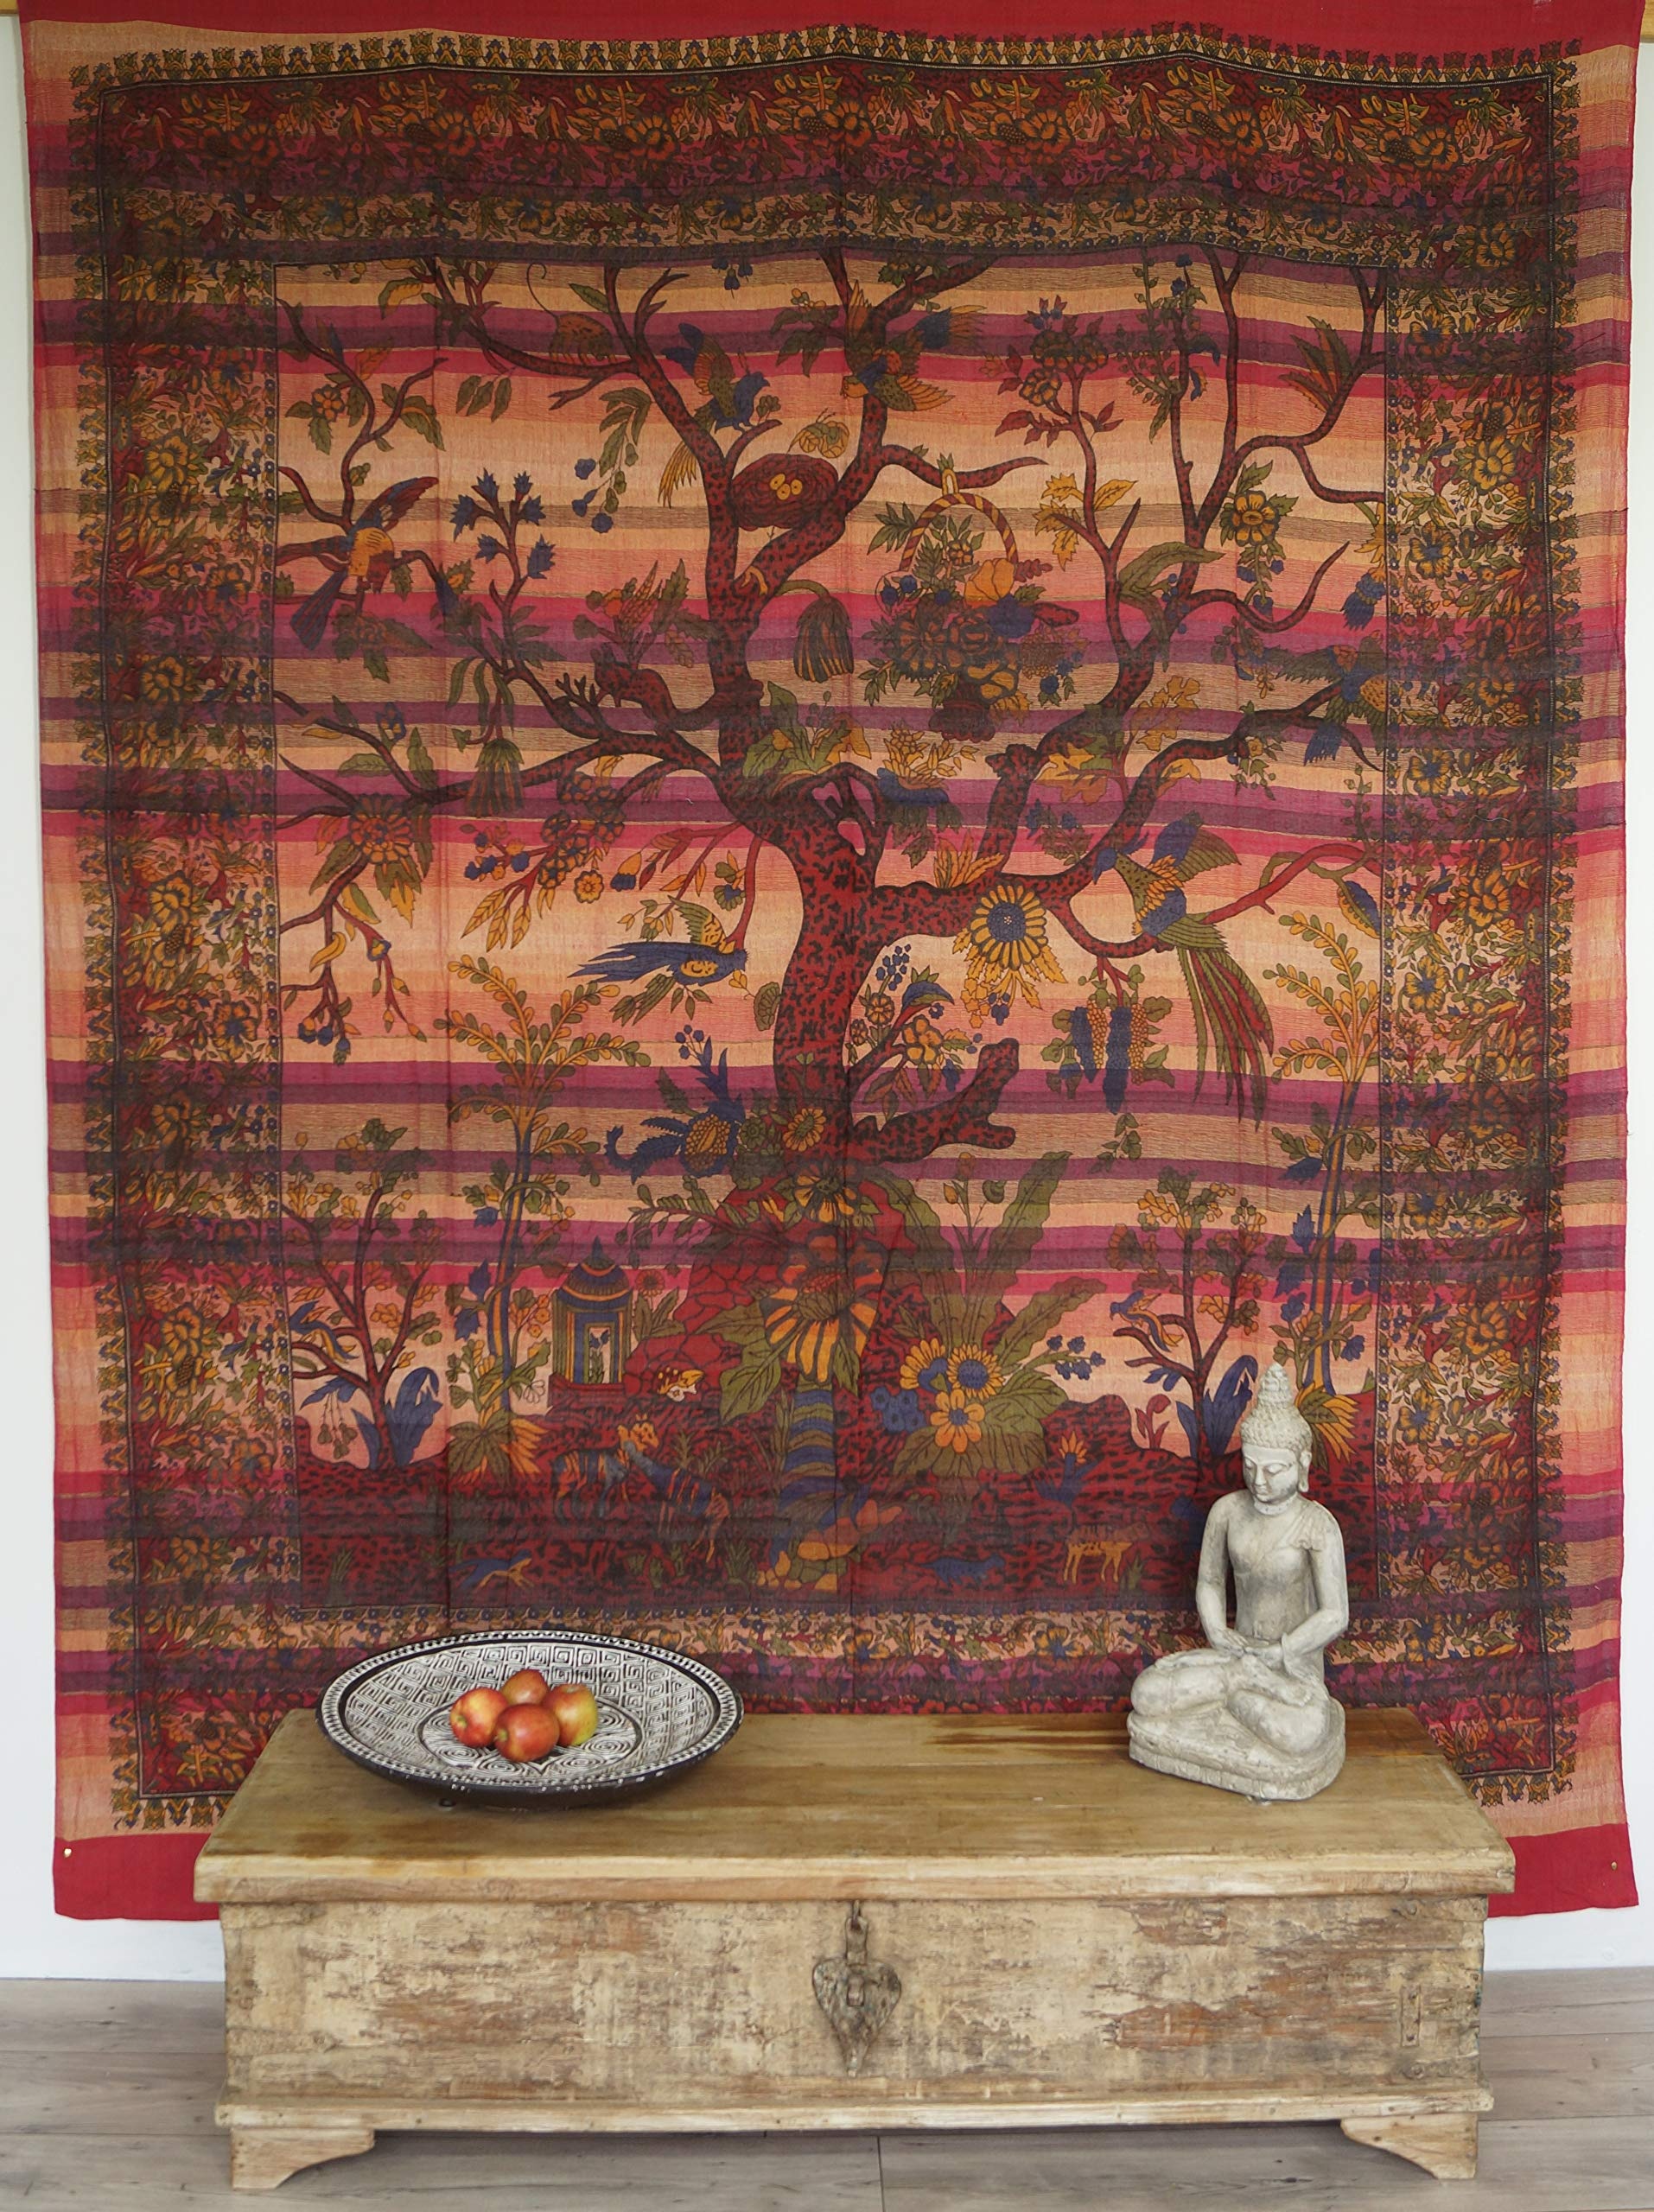 GURU SHOP Boho-Style Wandbehang, Indische Tagesdecke Lebensbaum/Tree of Life - Rot, Baumwolle, 250x210x0,2 cm, Bettüberwurf, Sofa Überwurf